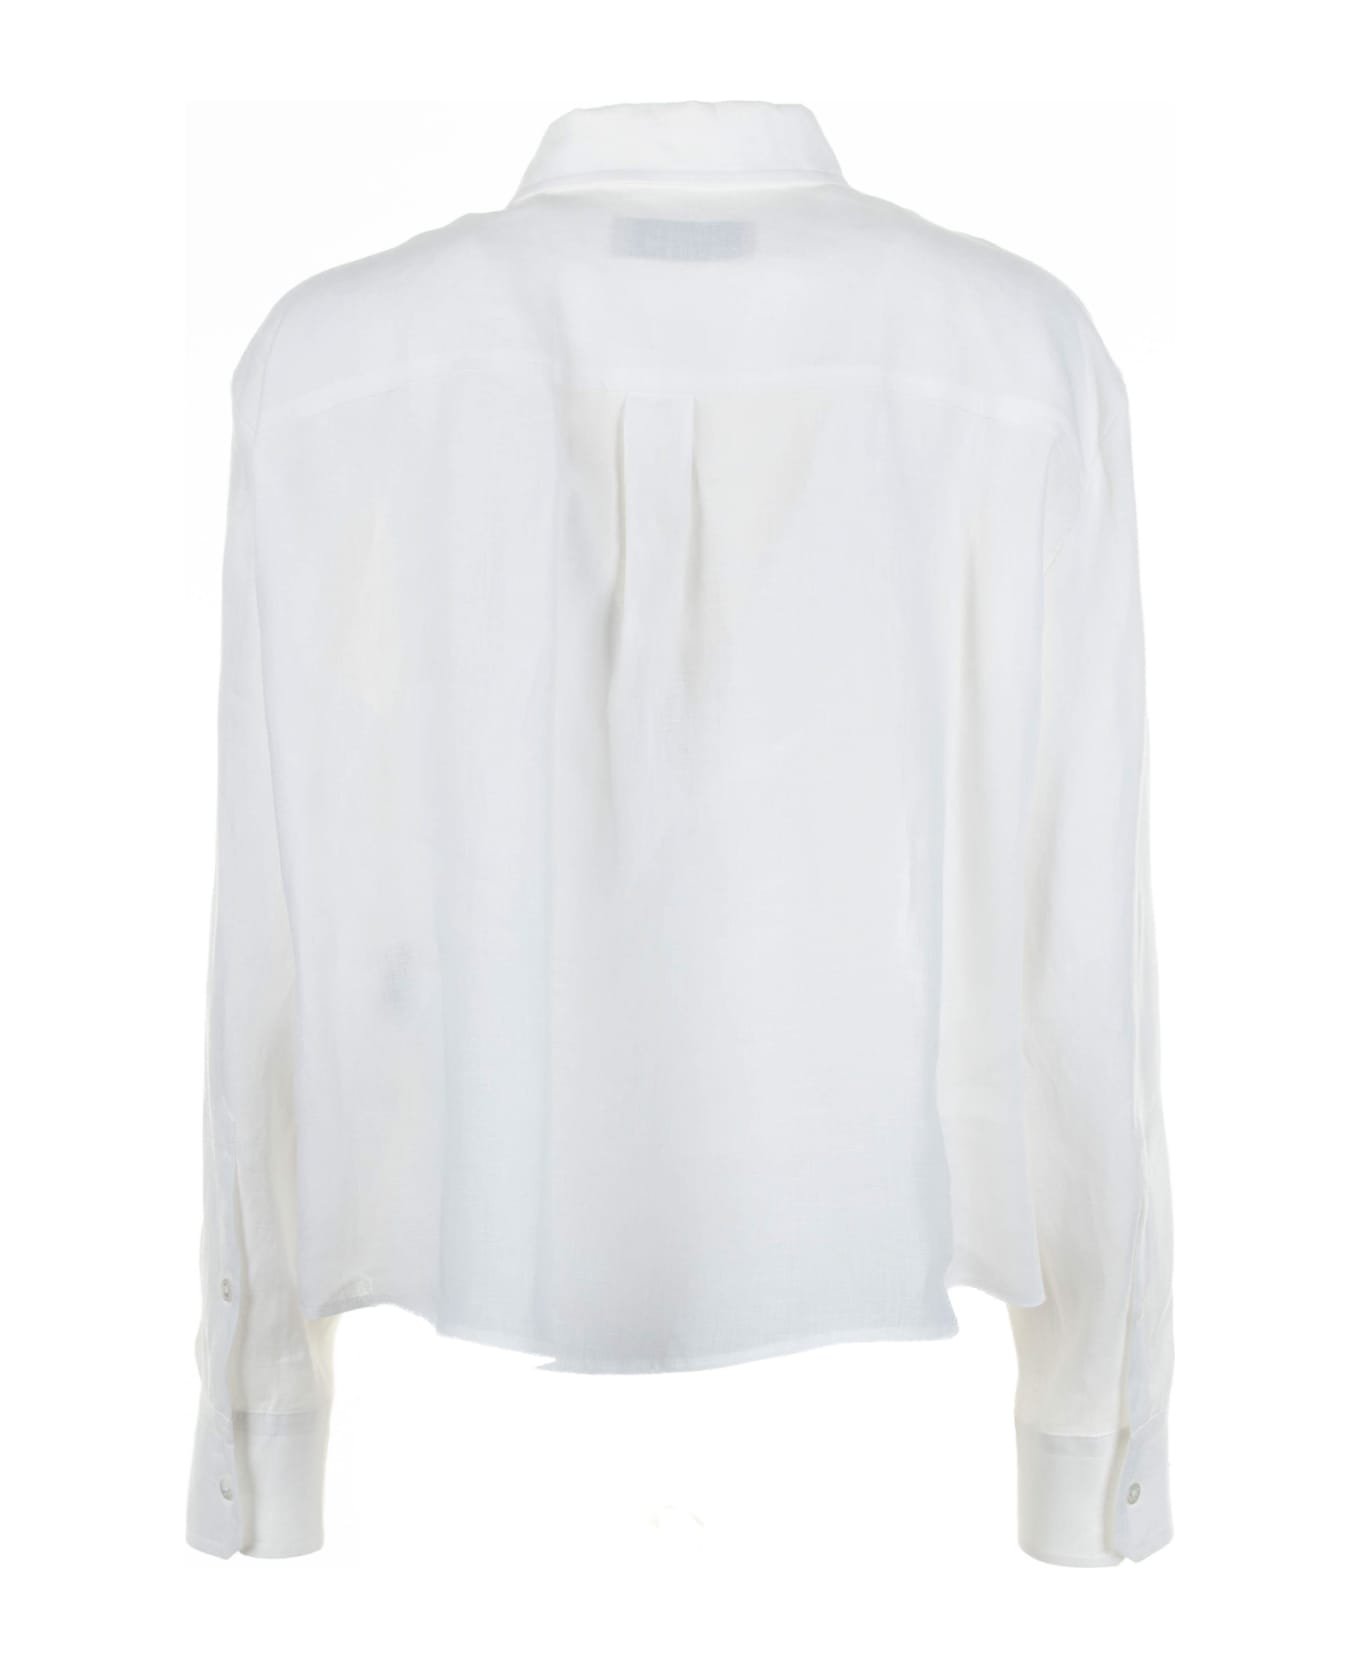 Weekend Max Mara White Linen Shirt - BIANCO シャツ